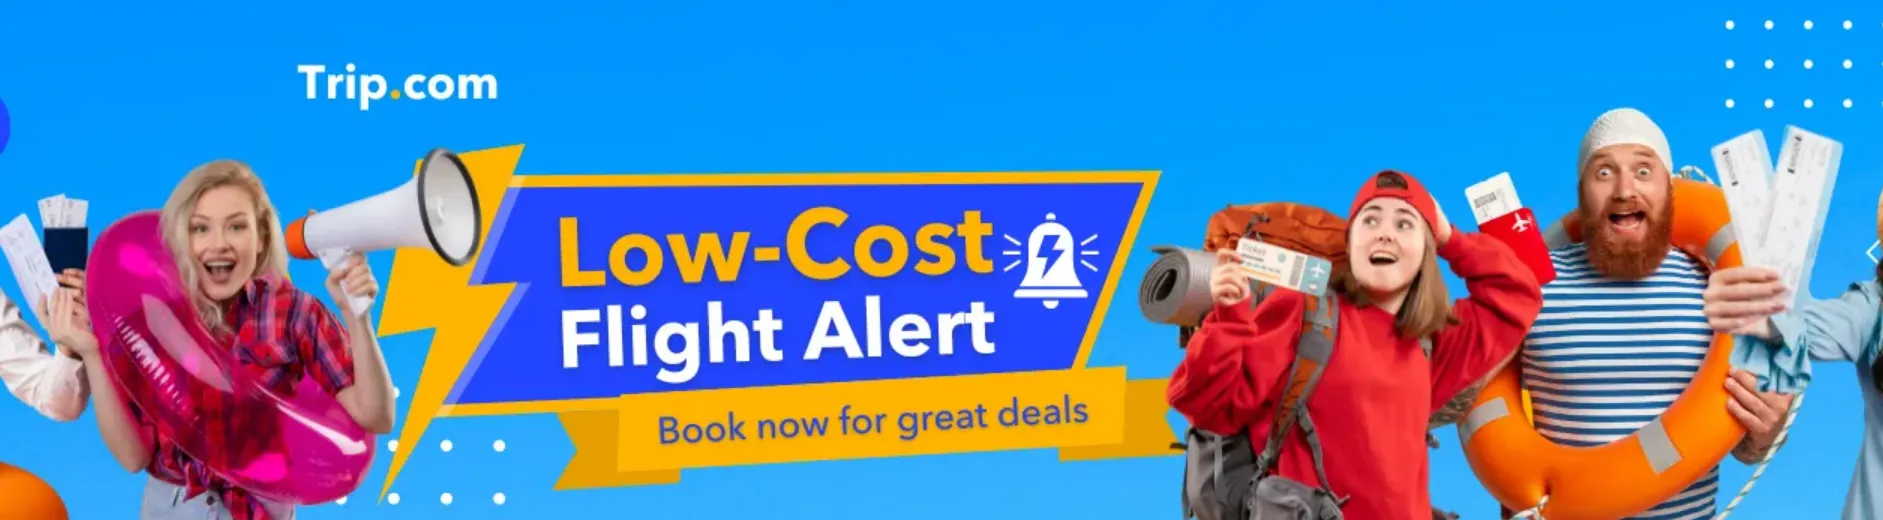 Trip.com Promo Code UK: Low-Cost Flight